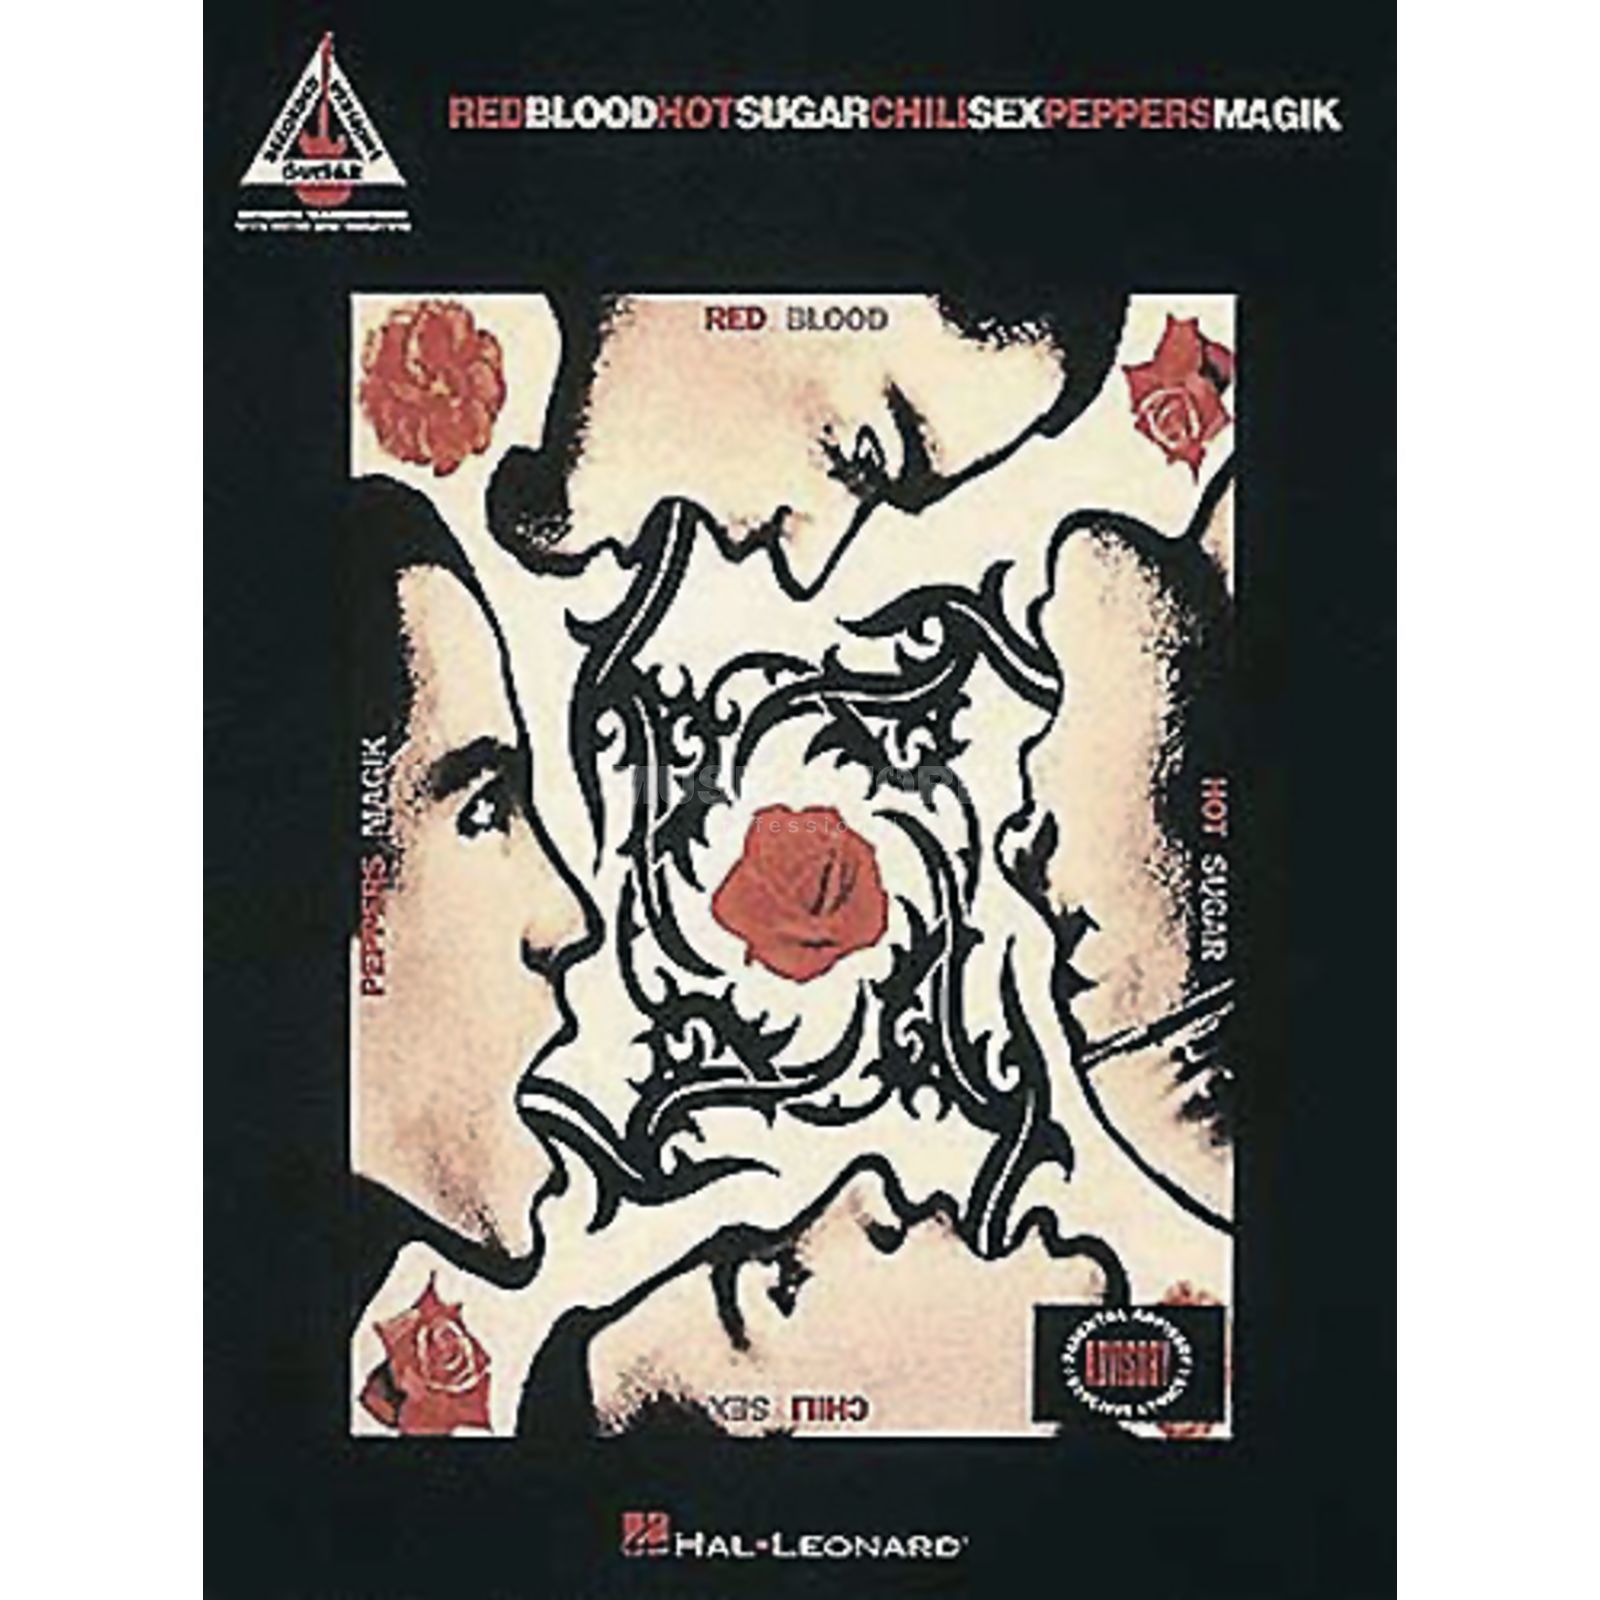 Blood sugar sex magik tour poster